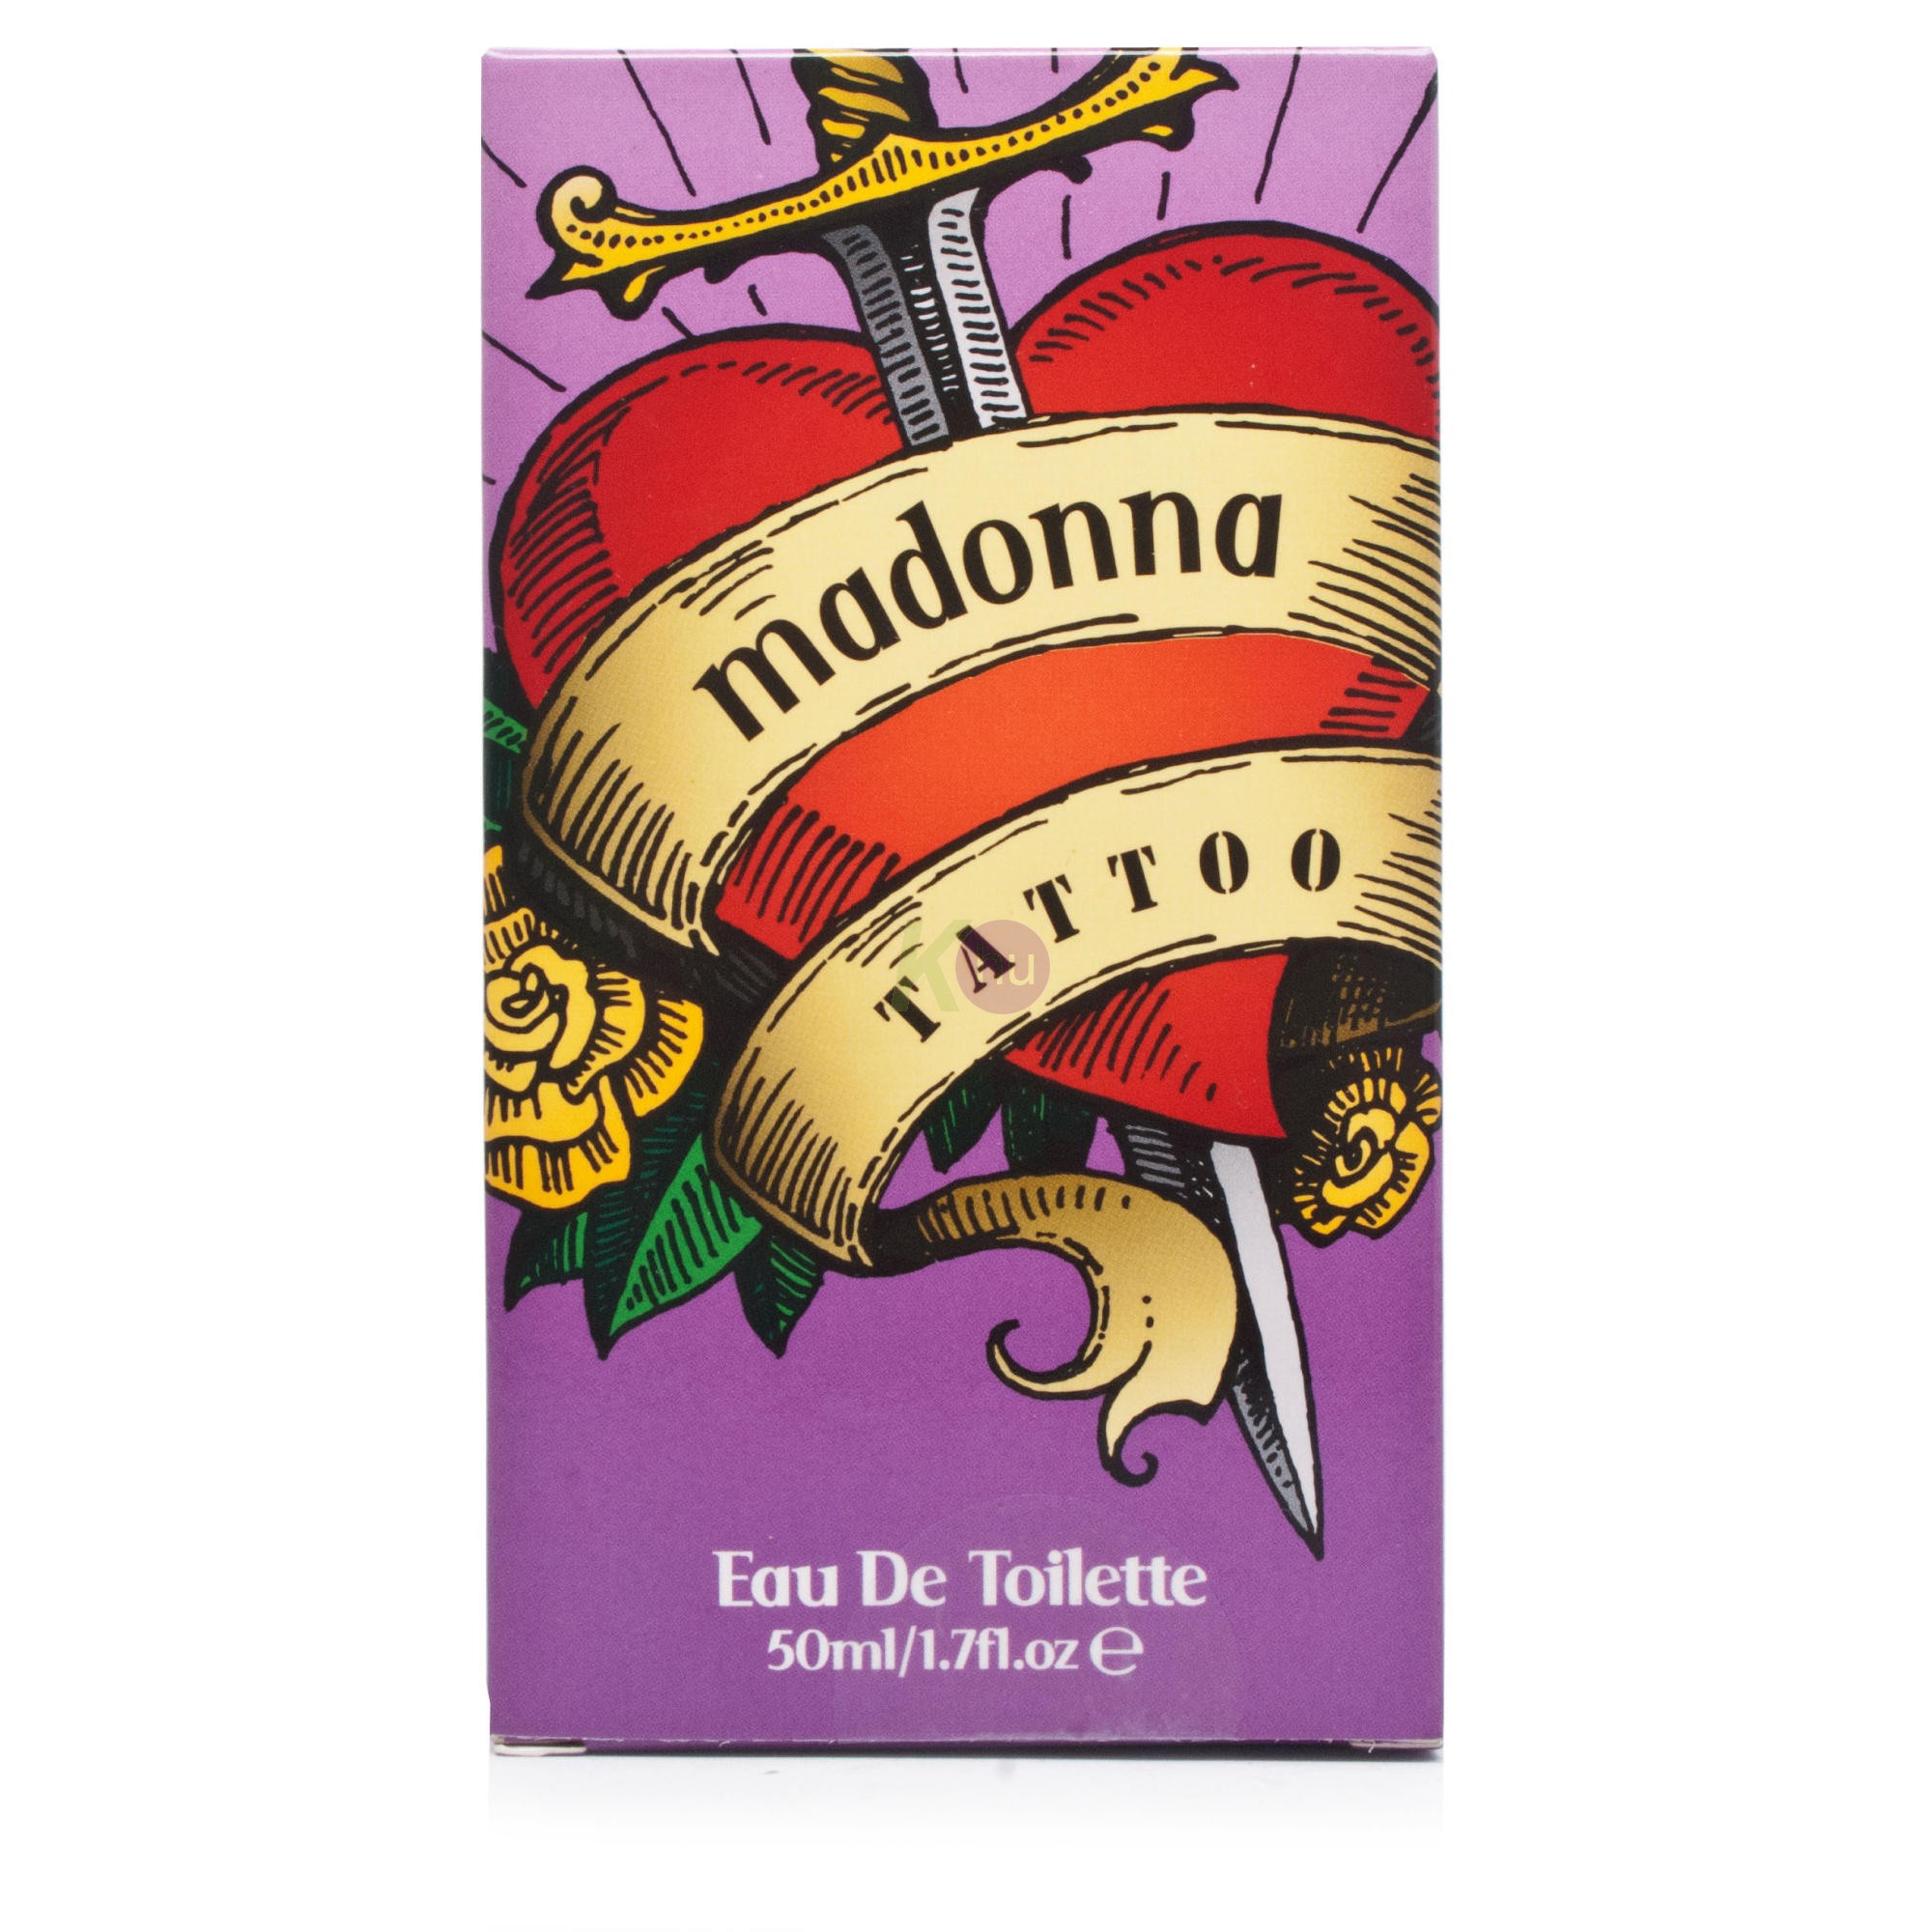 Madonna edt 50ml tattoo 18020968